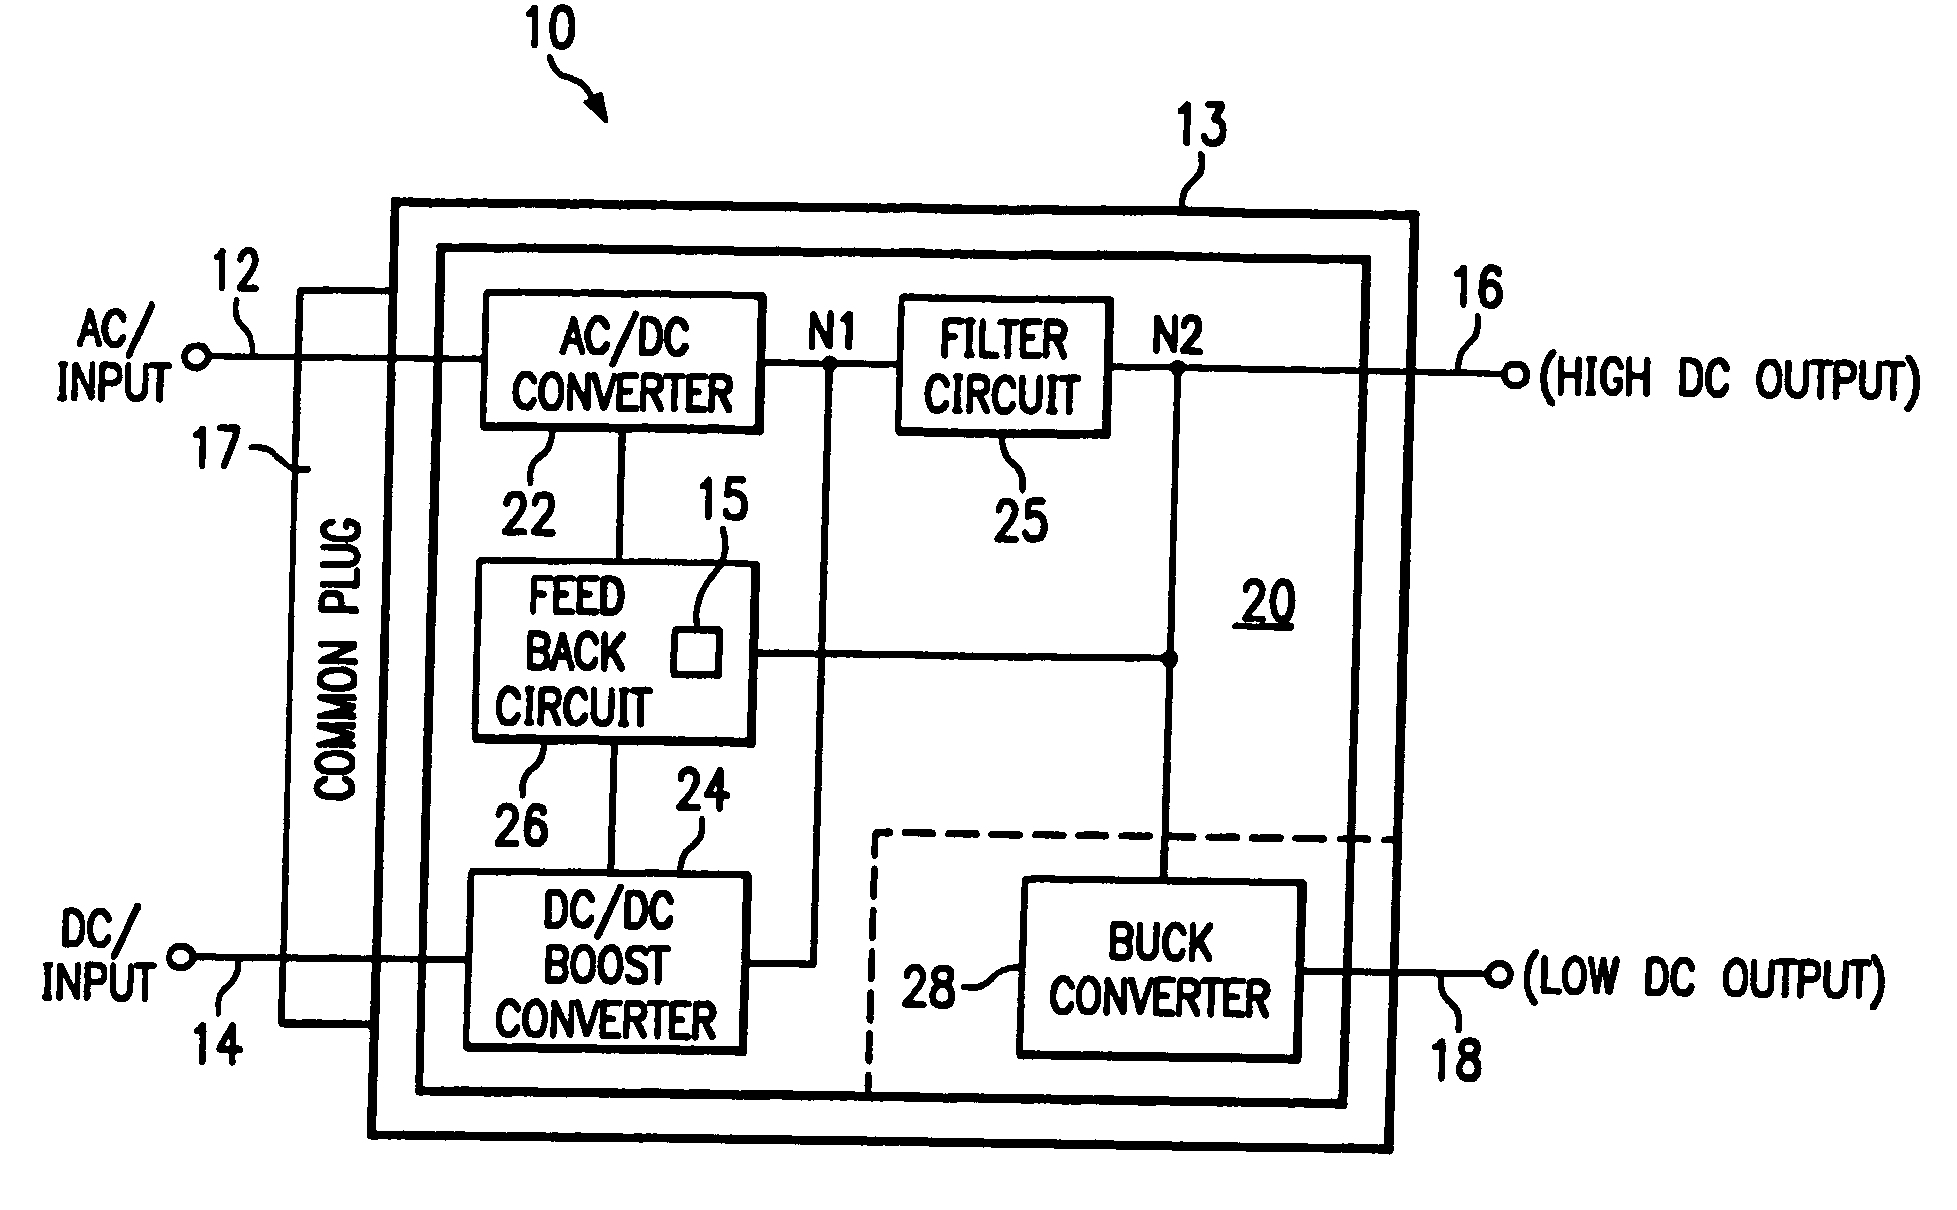 AC/DC power converter